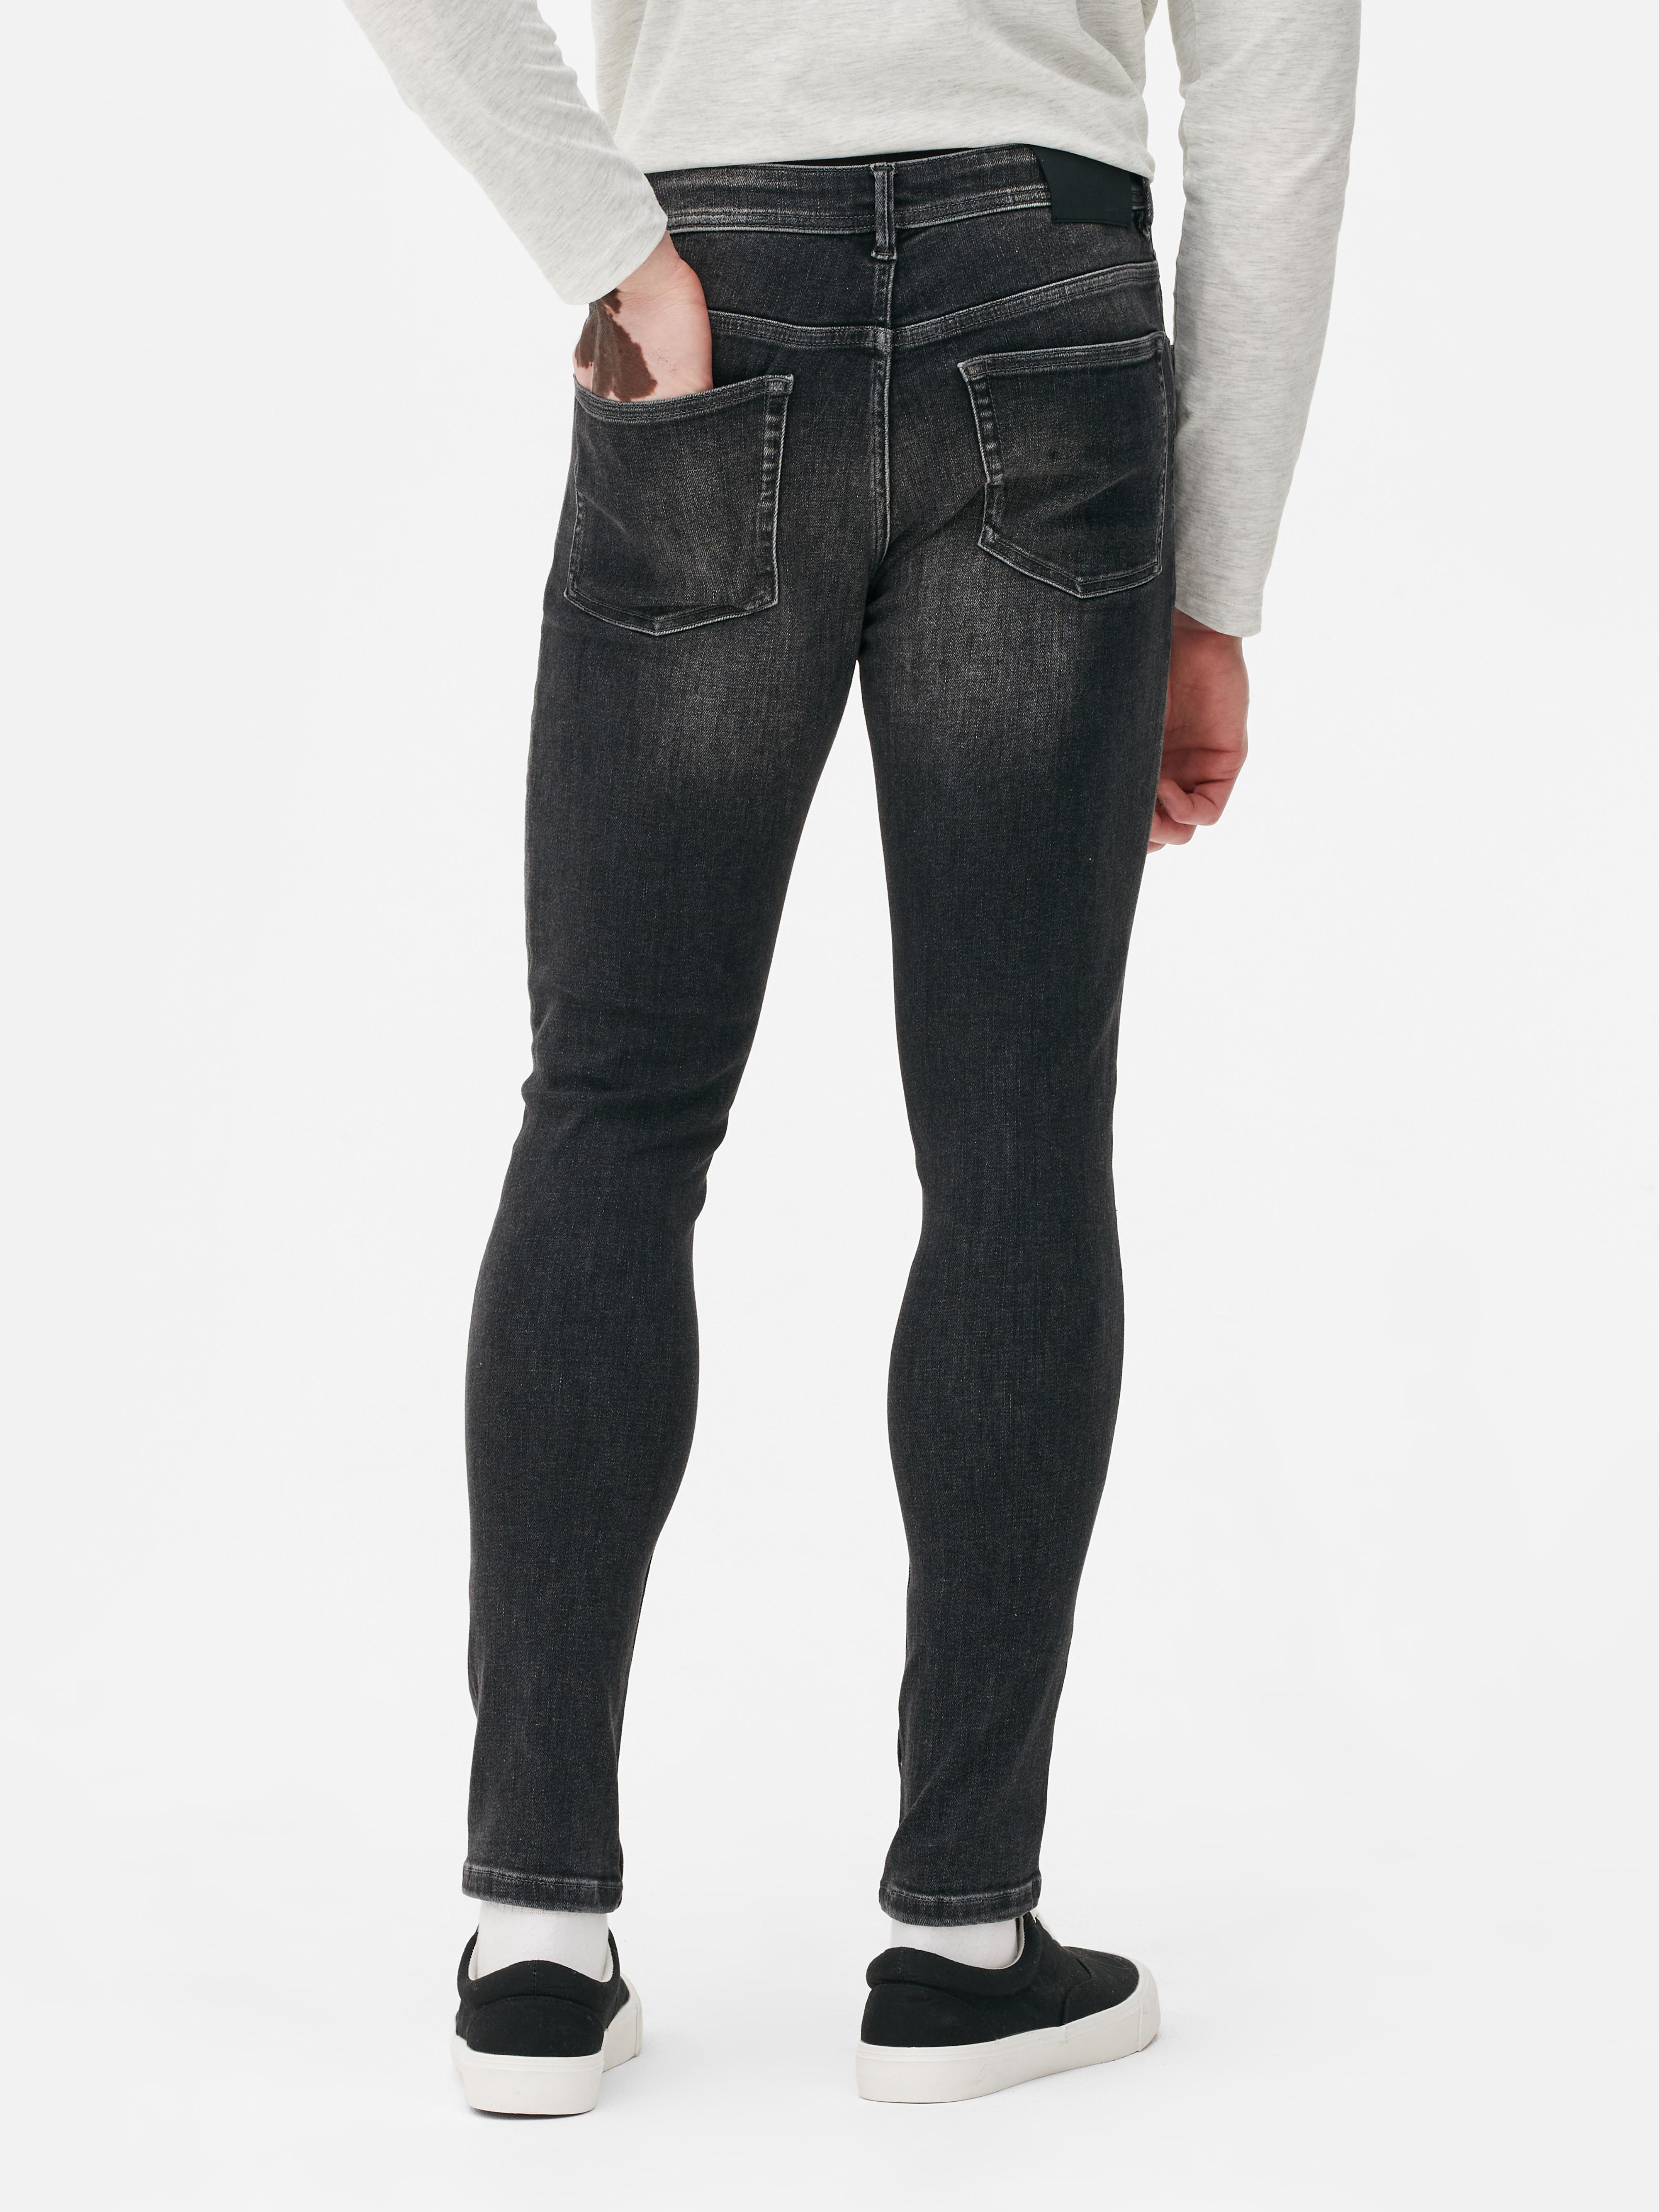 Men's Charcoal Skinny Fit Jeans | Primark